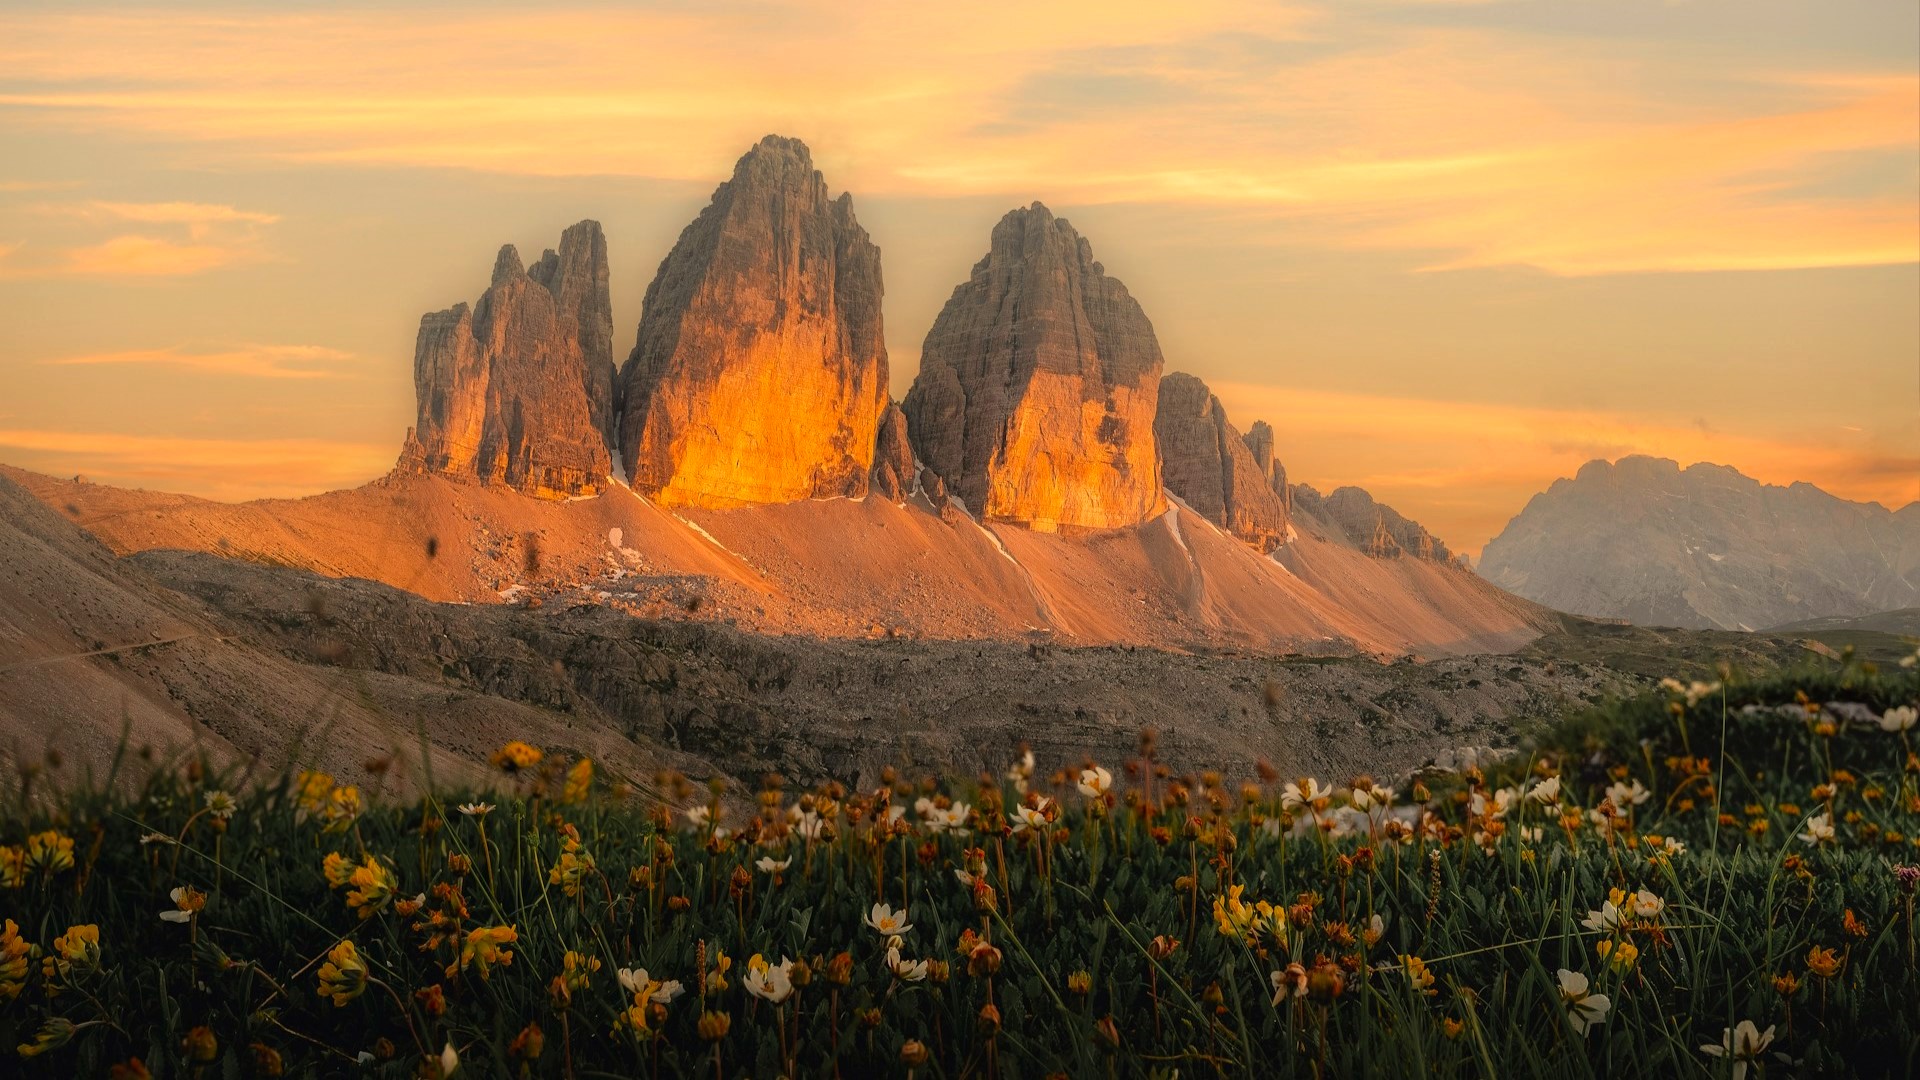 Three peaks of Lavaredo, Sexten Dolomites of northeastern Italy. Photo by eberhard grossgasteiger